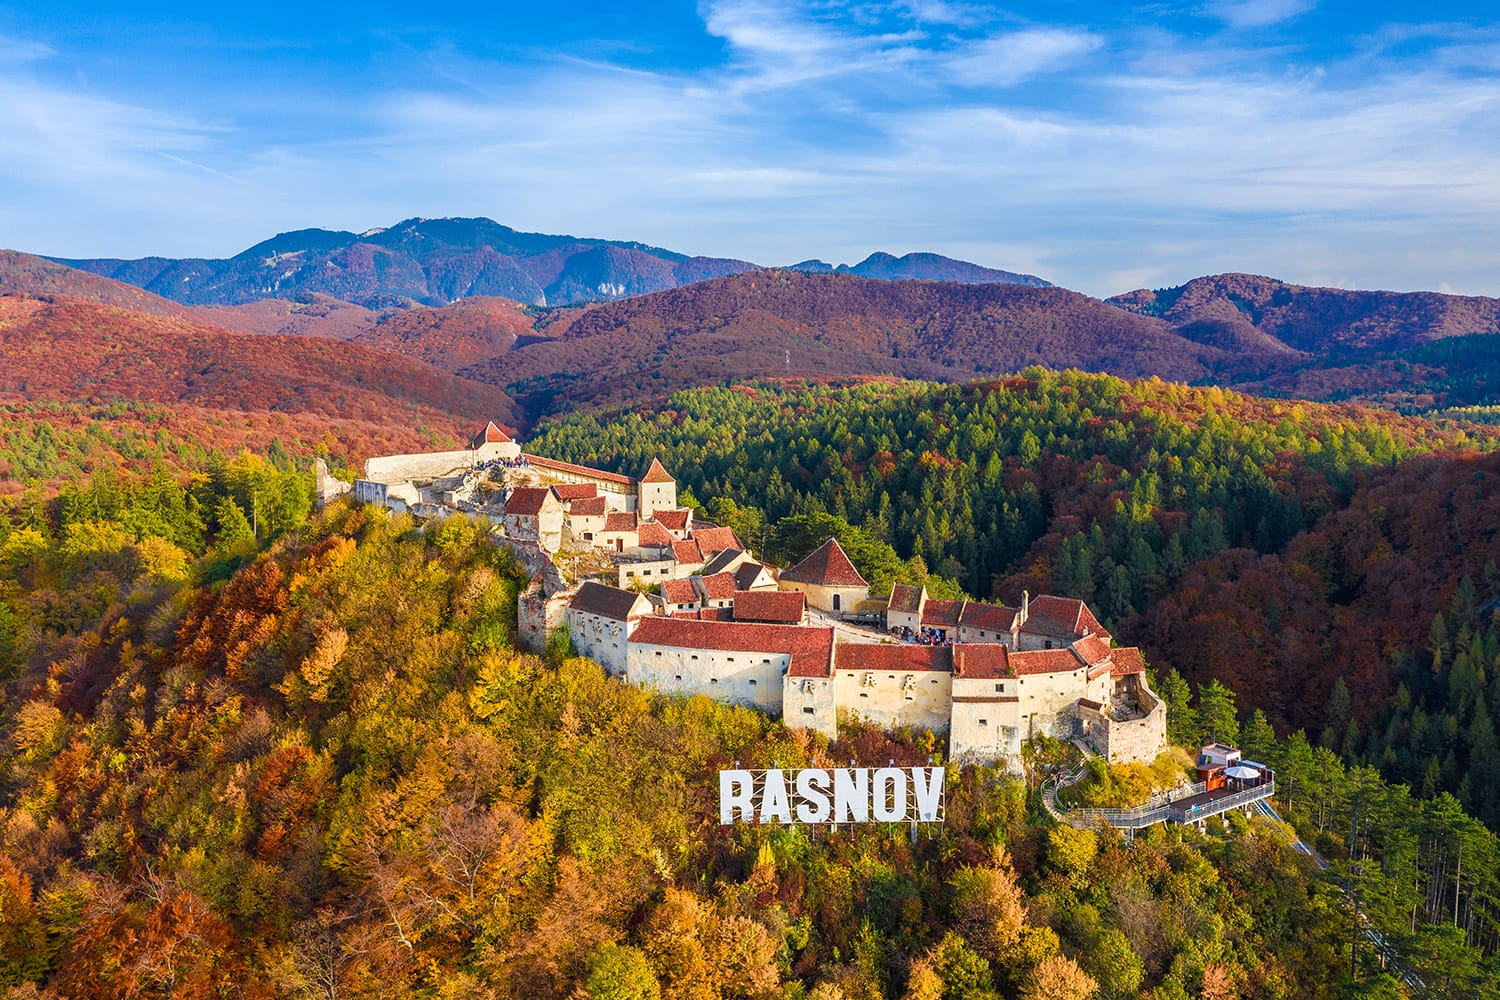 Landscape with Medieval fortress Rasnov, Brasov , Transylvania, Romania